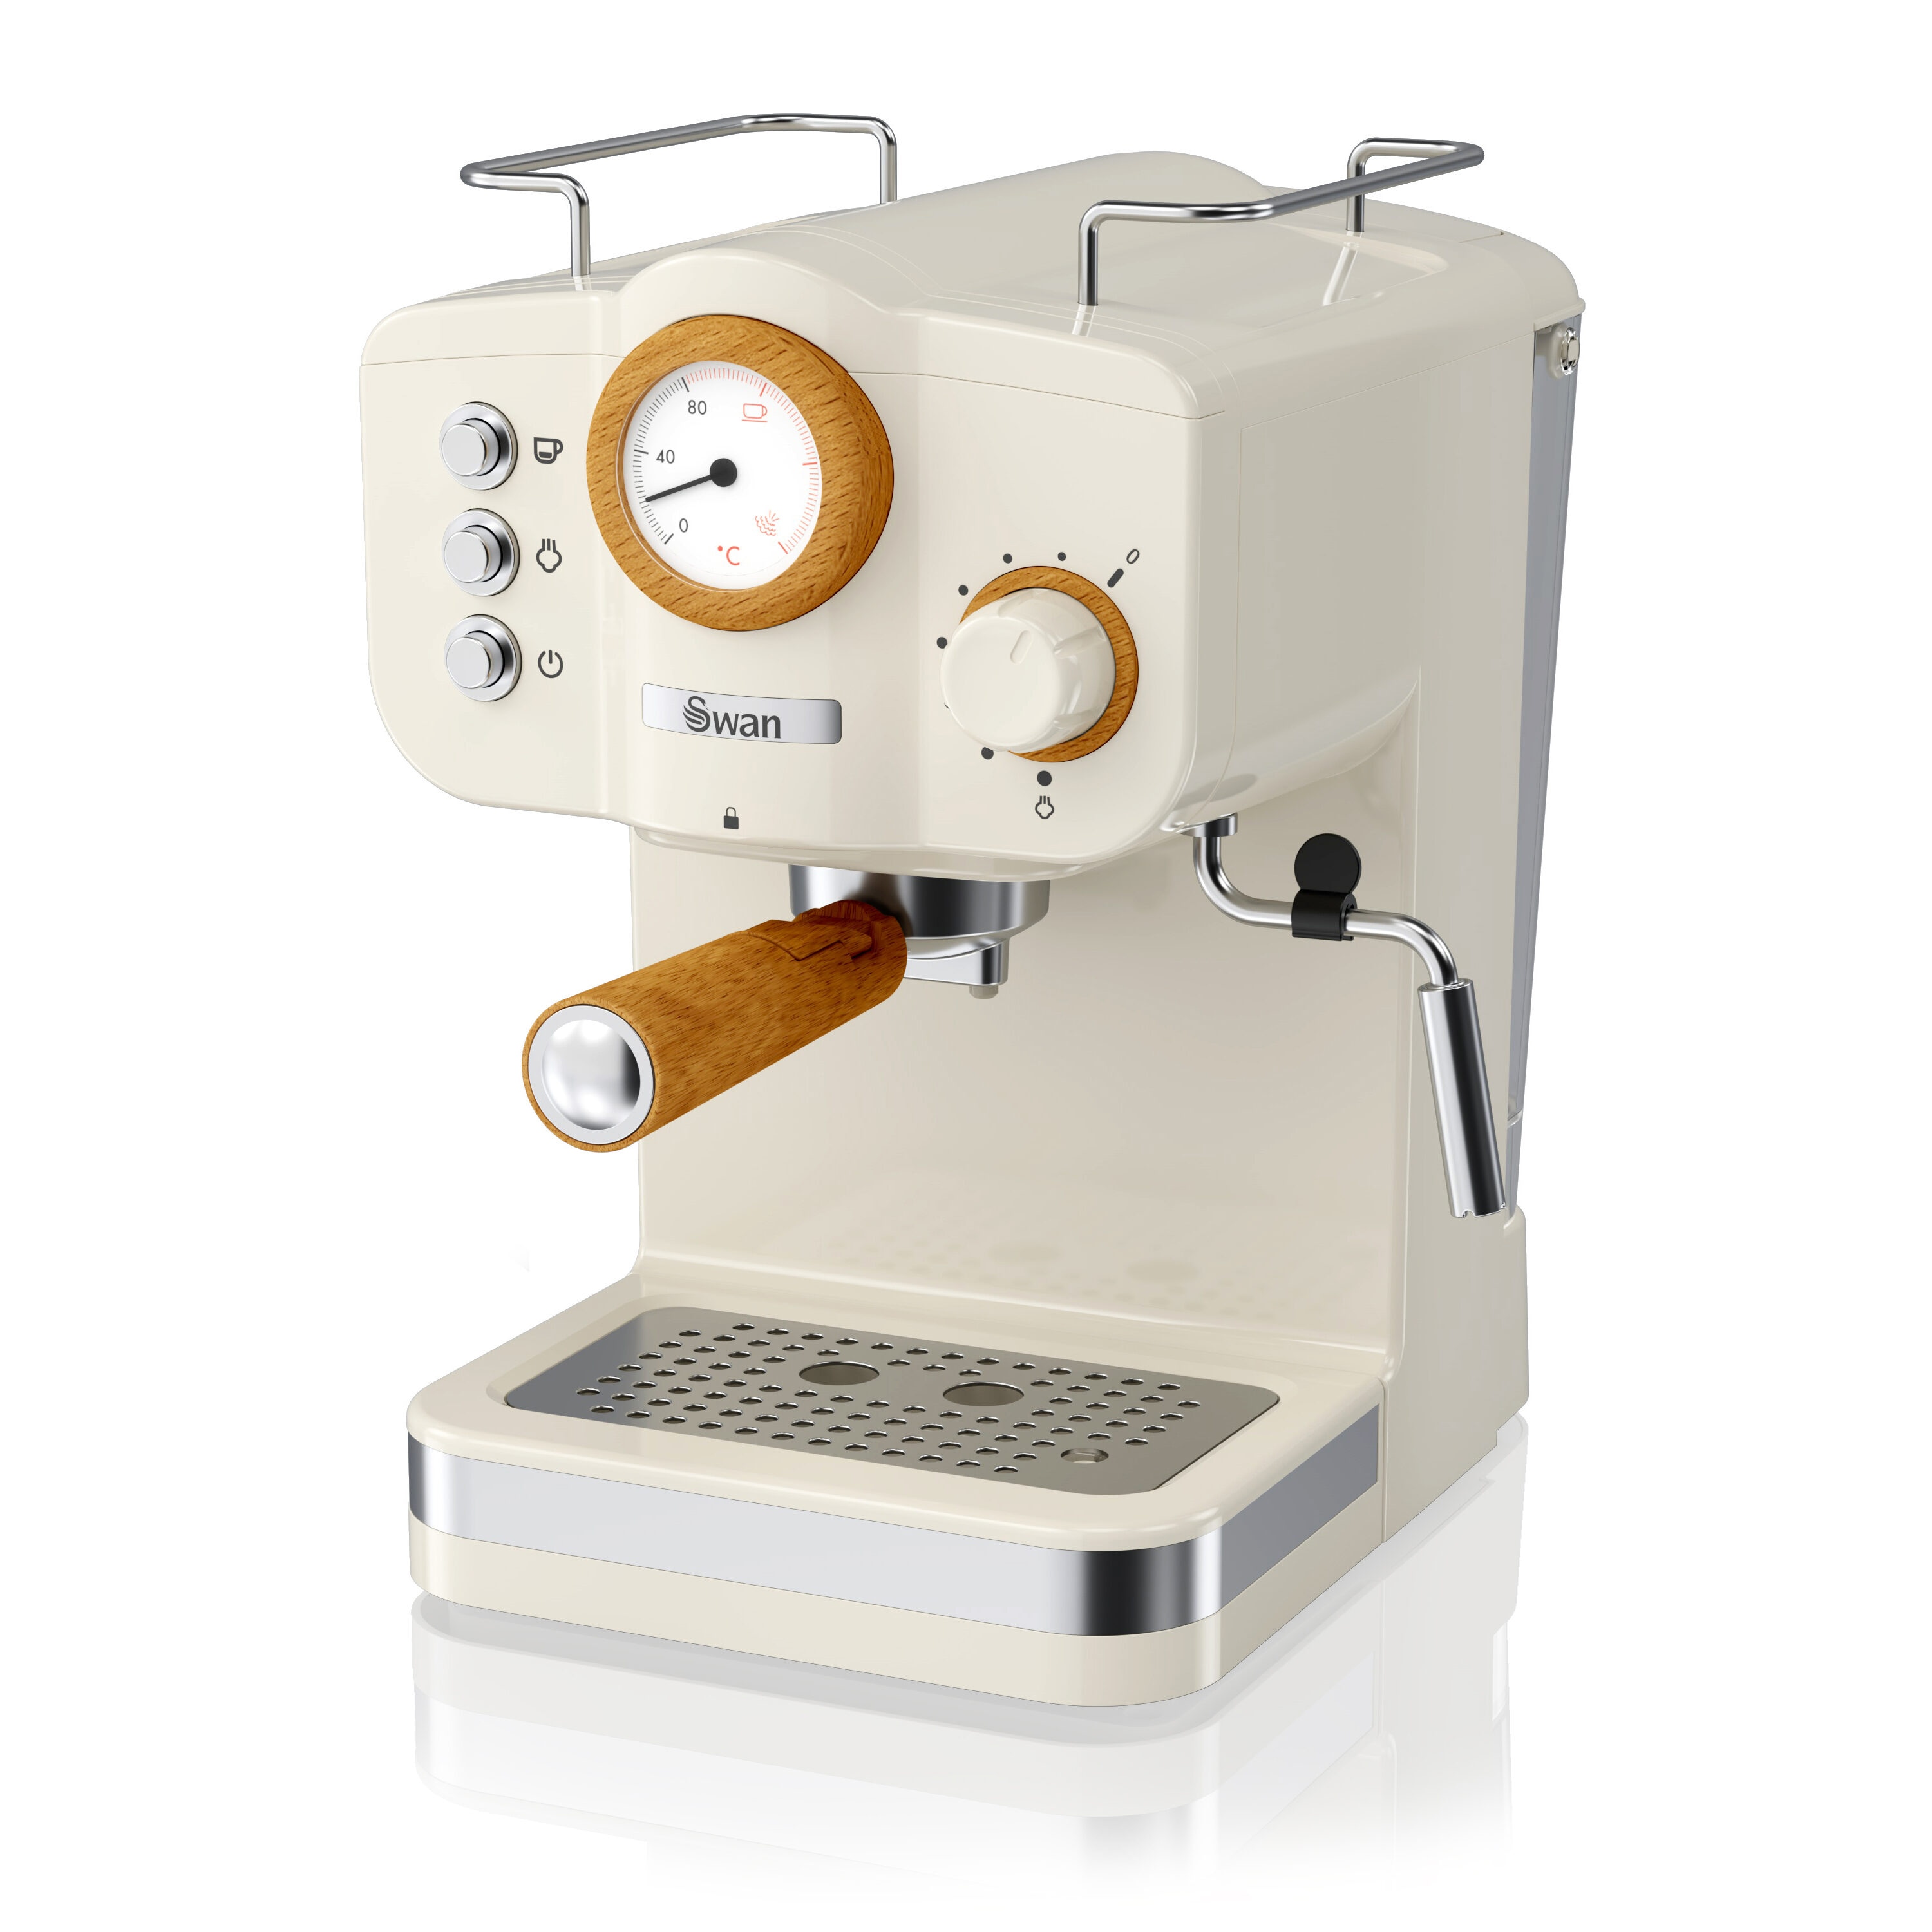 SWAN Stainless Steel Manual Espresso Machine in the Espresso